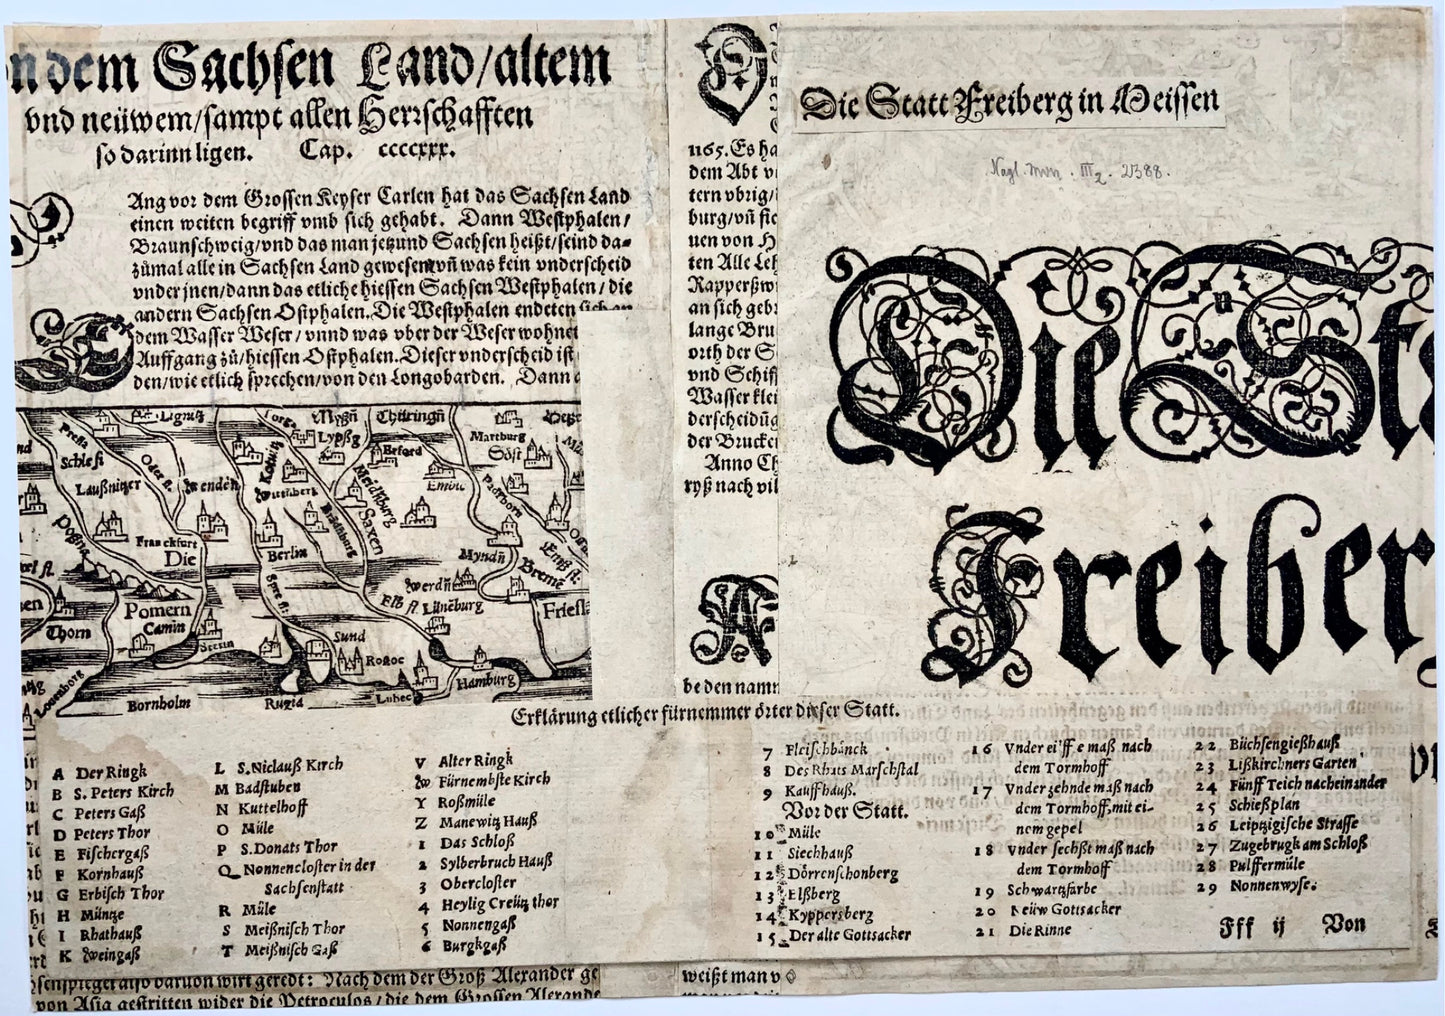 1554 Freiberg in Sassonia, Sebastian Munster, monogrammista IG